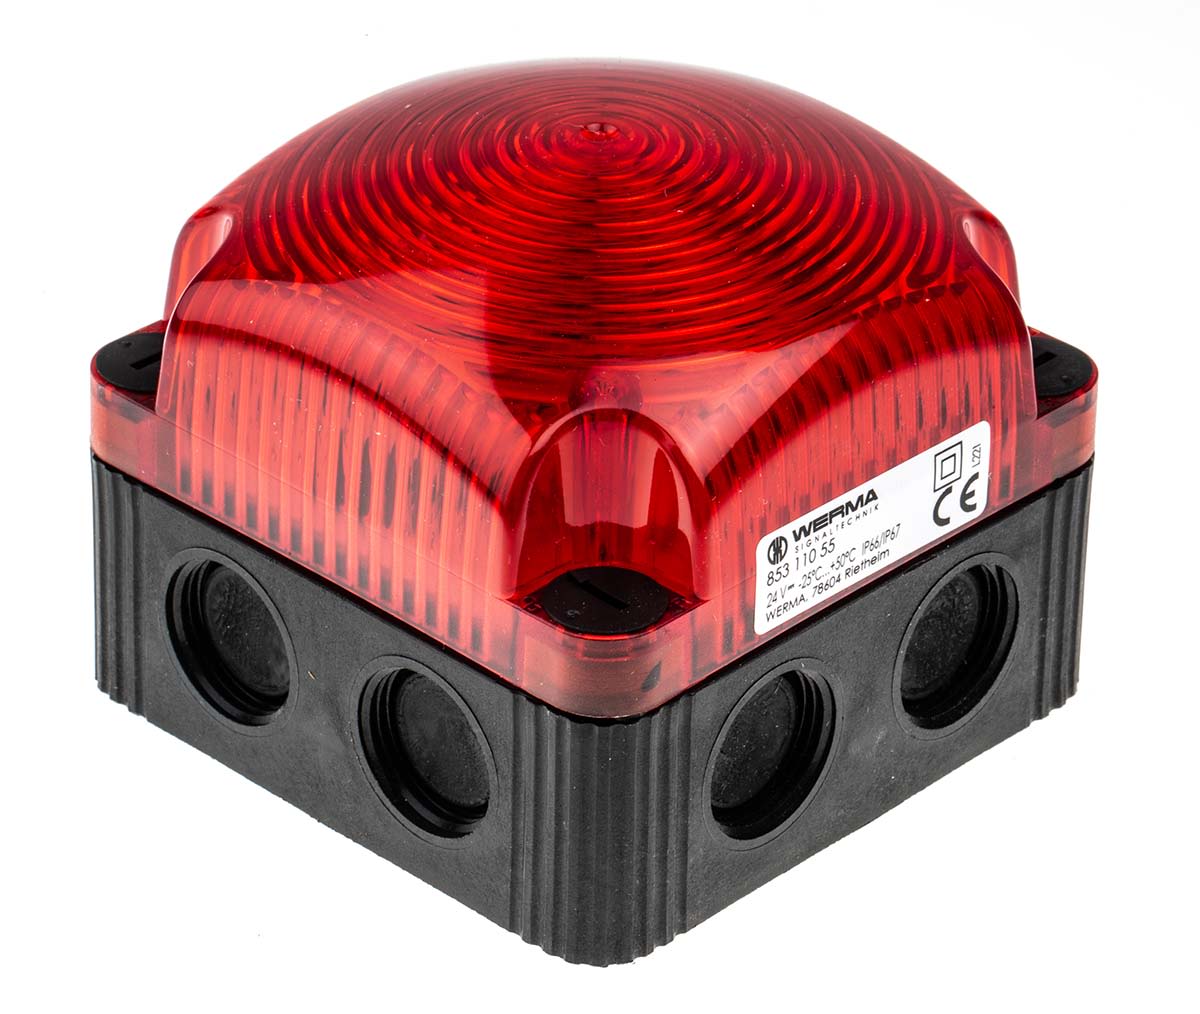 Werma BMW 853 Series Red Flashing Beacon, 24 V dc, Surface Mount, Wall Mount, LED Bulb, IP66, IP67